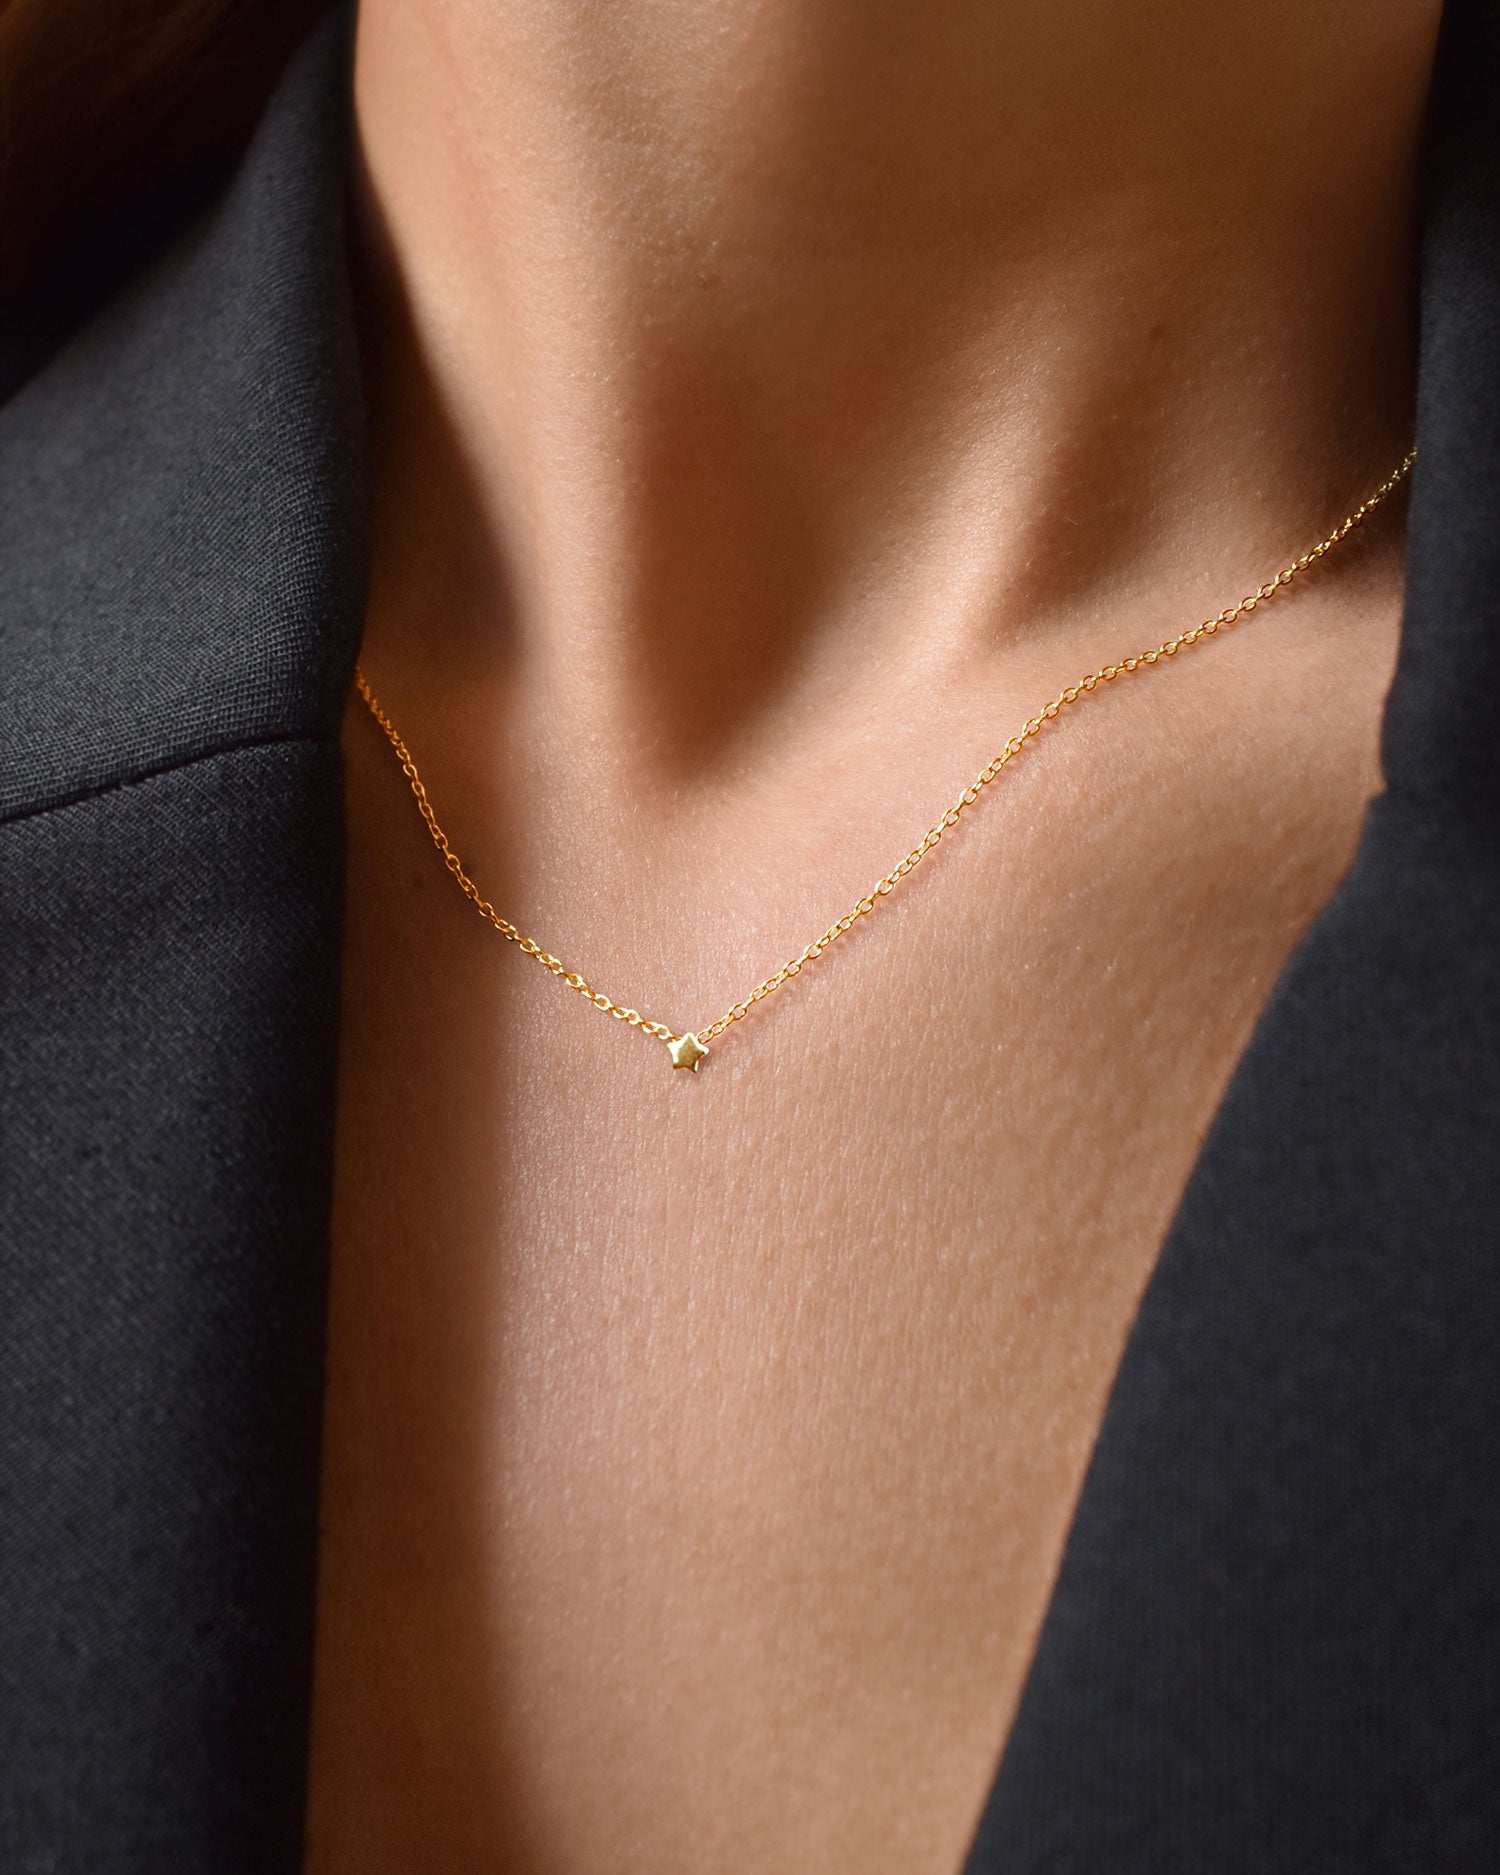 Stella Nova drop necklace gold